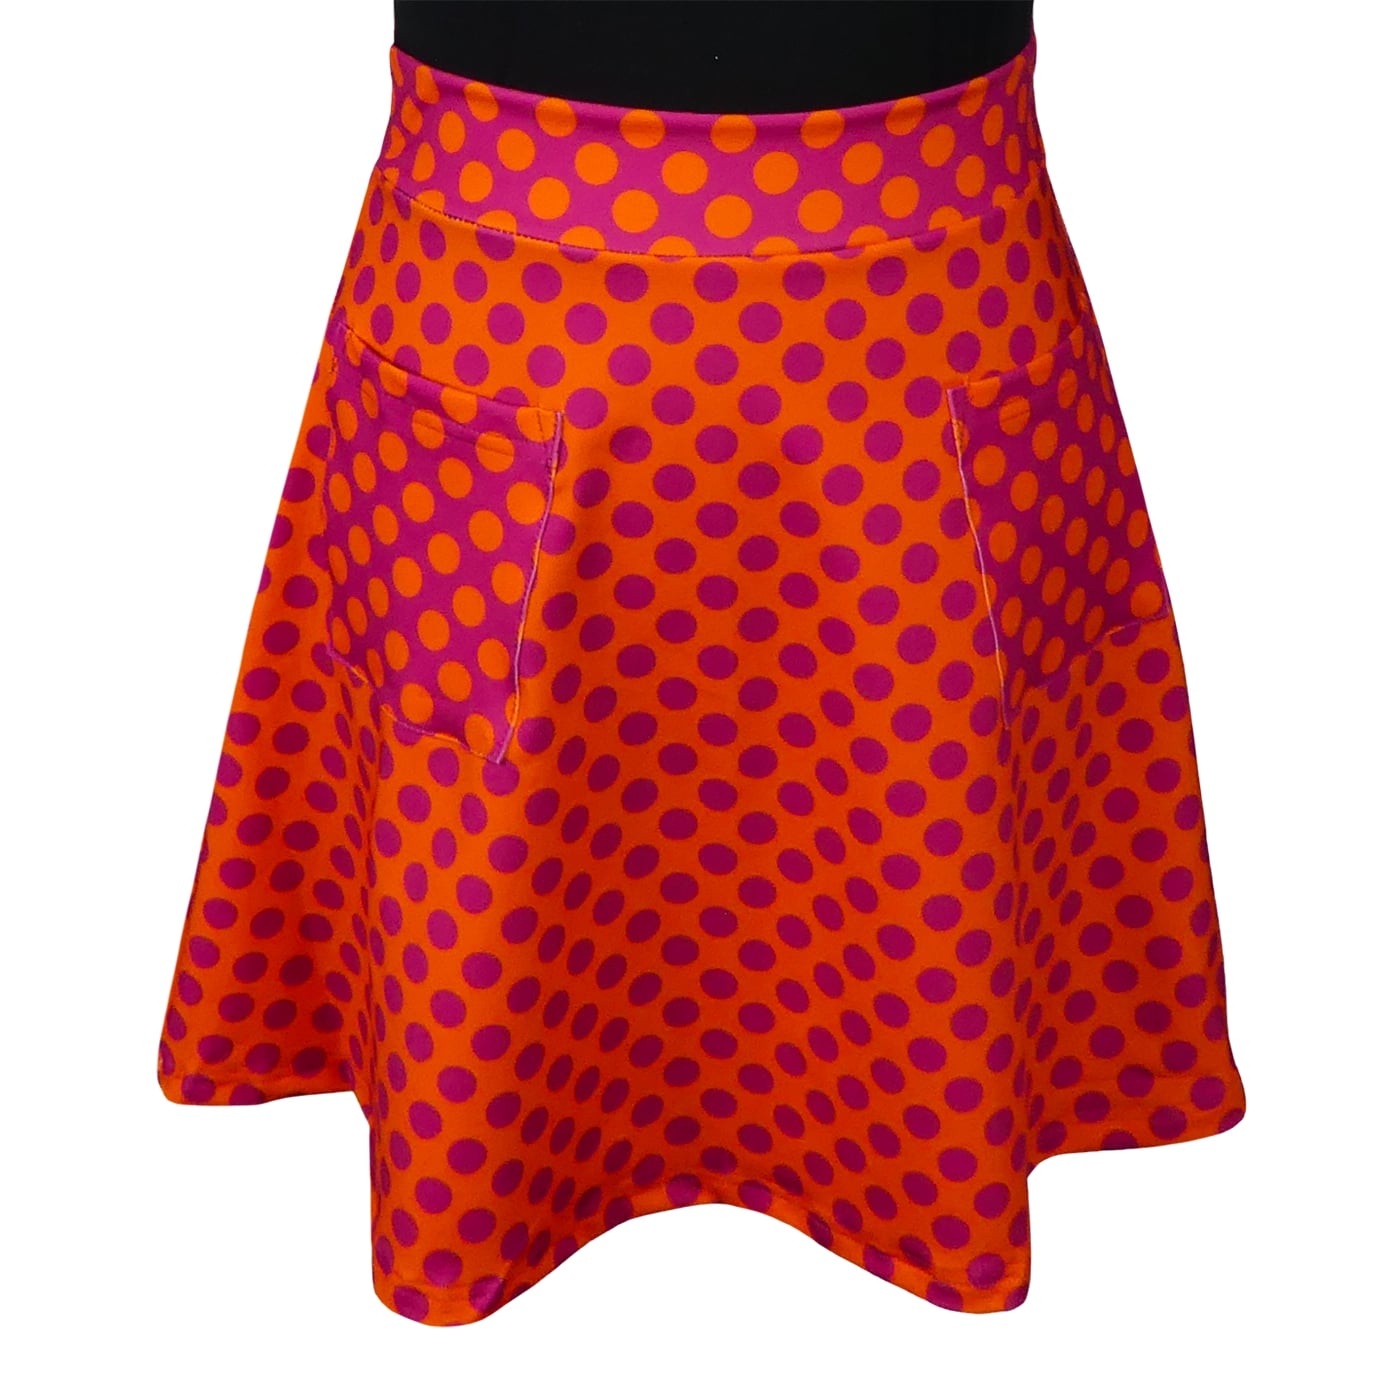 Sunrise Short Skirt by RainbowsAndFairies.com (Purple Orange - Polka Dots - Psychedelic - Skirt With Pockets - Aline Skirt - Cute Flirty - Vintage Inspired) - SKU: CL_SHORT_SUNRS_ORG - Pic 01